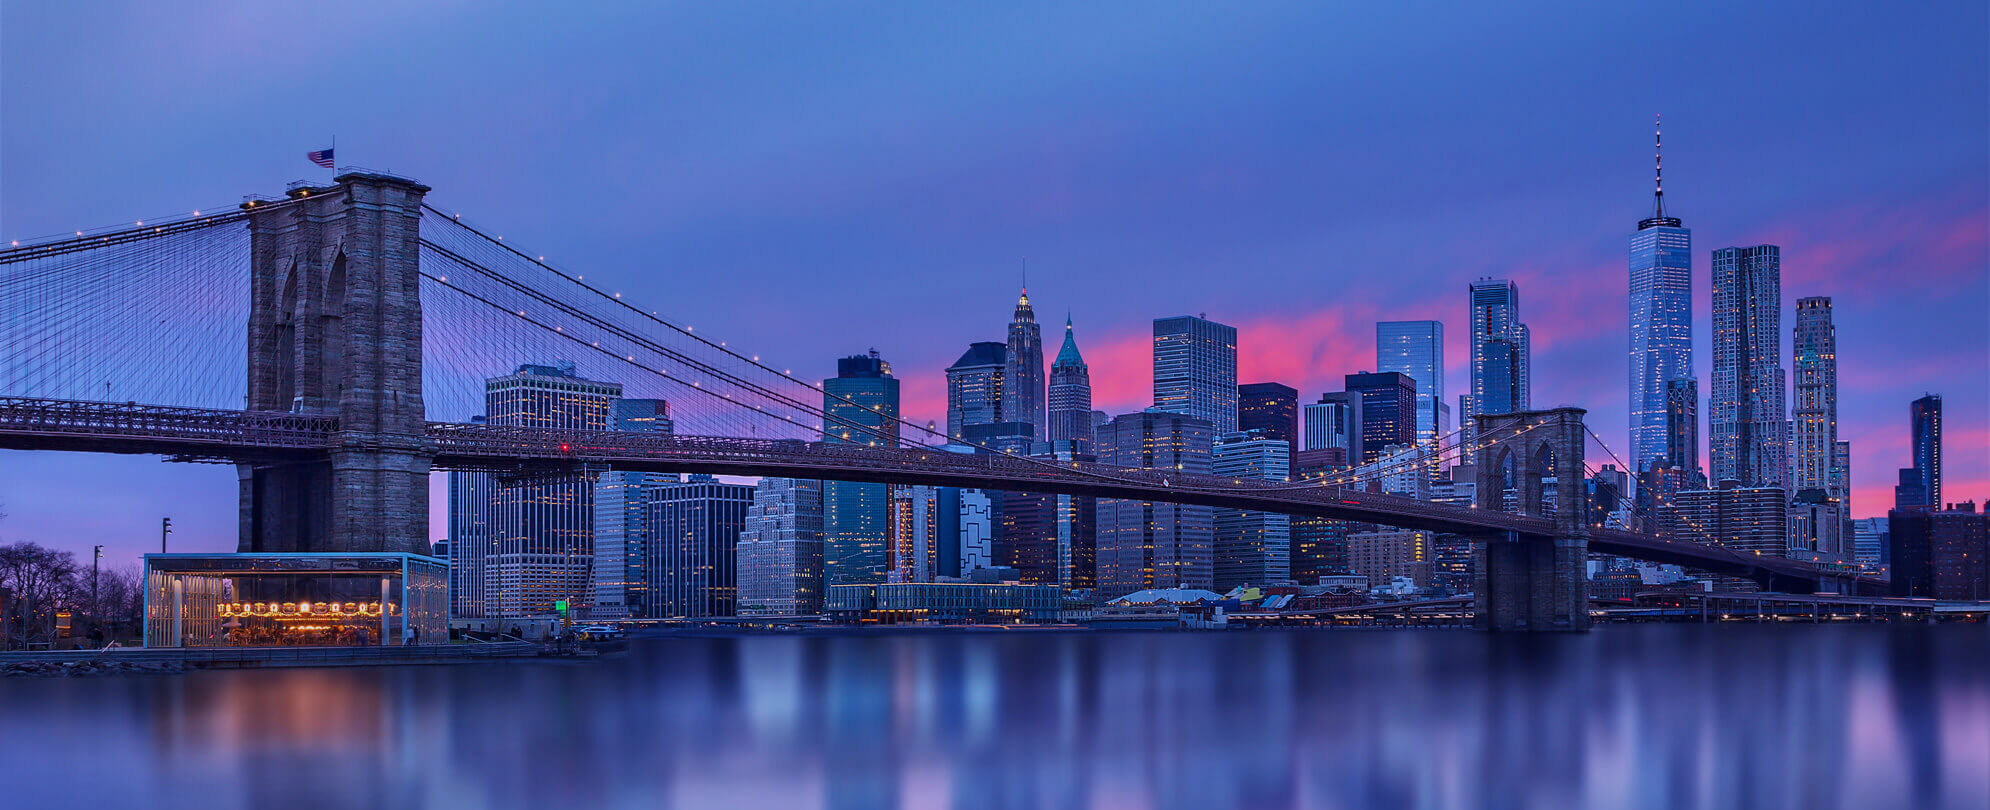 The Brooklyn Bridge and New York skyline at night 